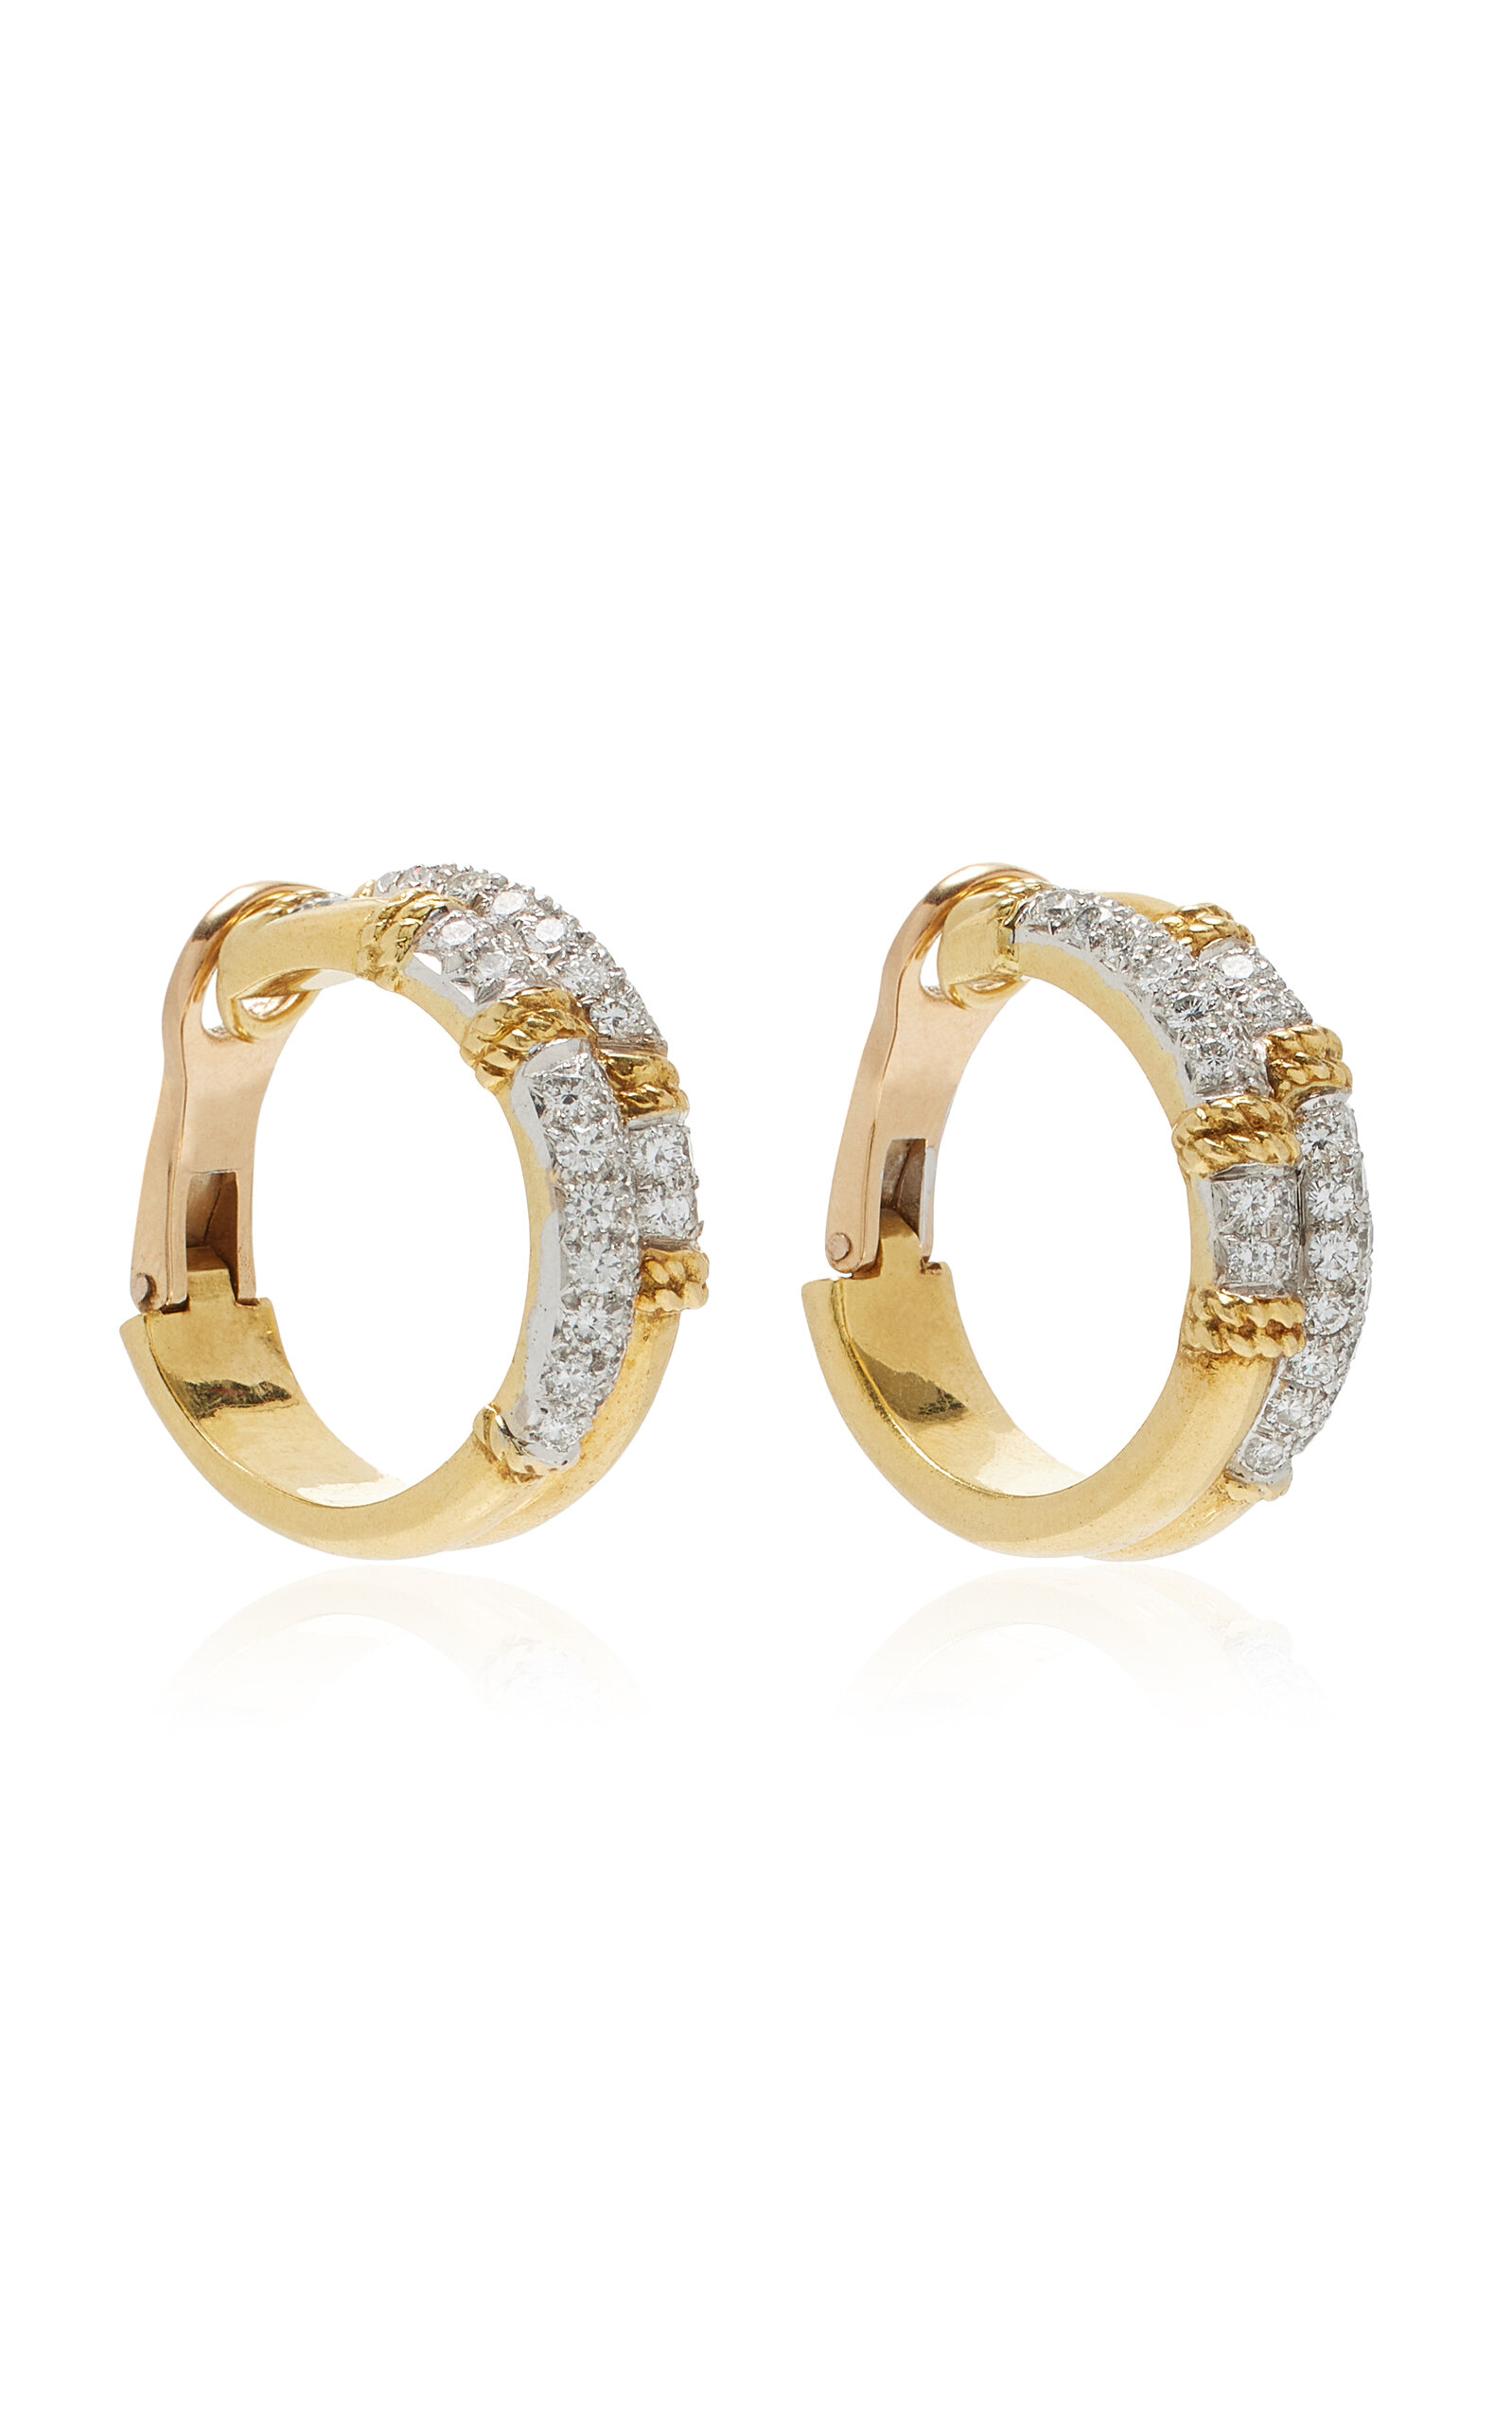 One-of-a-Kind Estate Kutchinsky 18K Yellow Gold Diamond Hoop Earrings